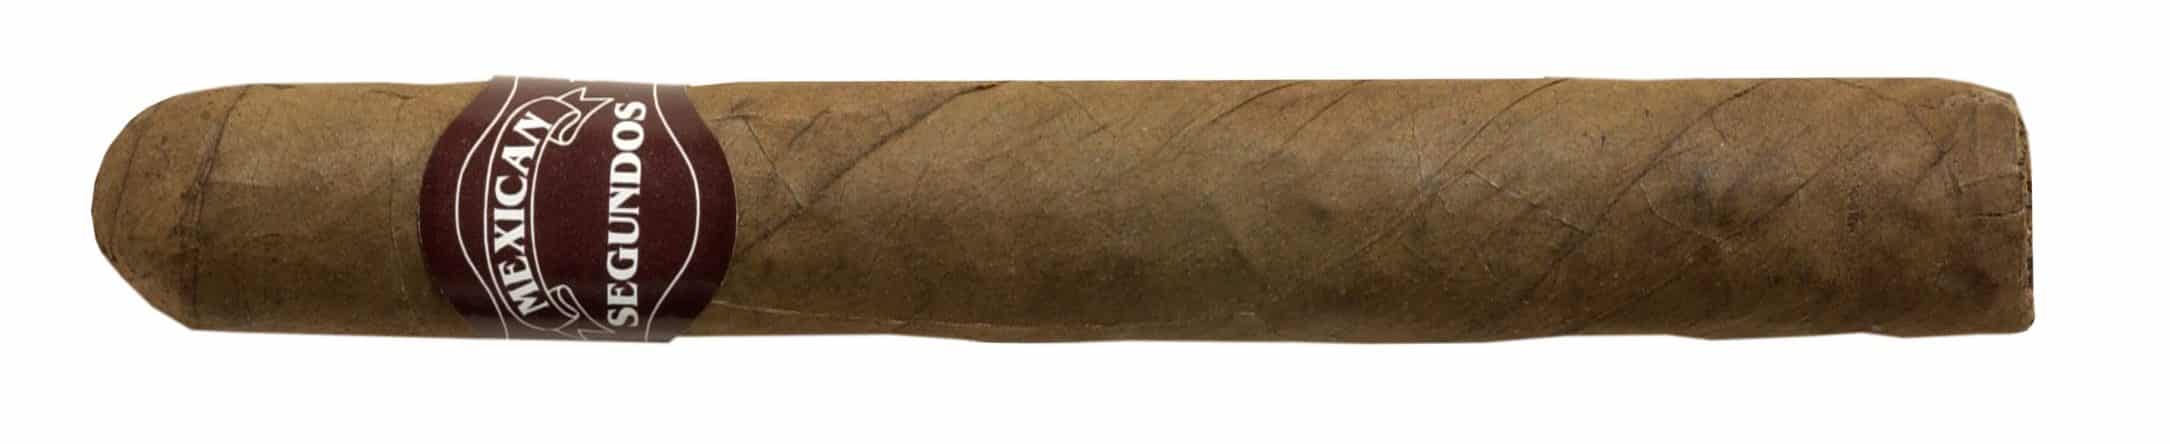 mexican segundos number 25 natural single cigar